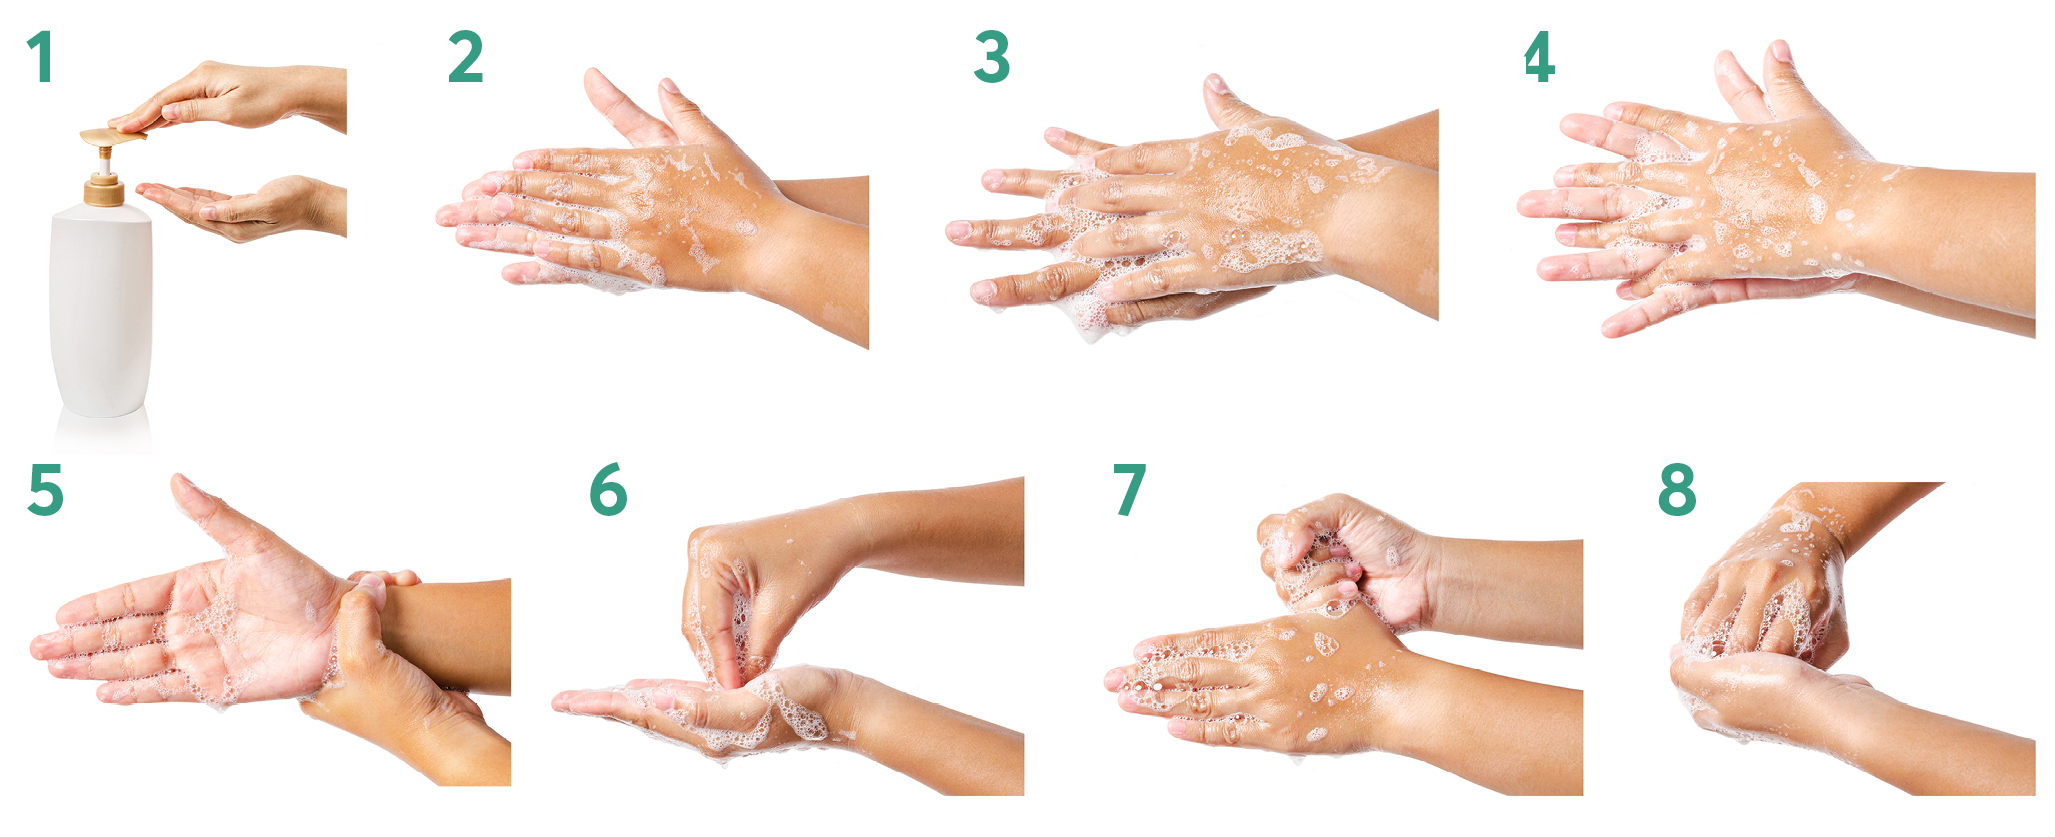 Washing hands diagrams